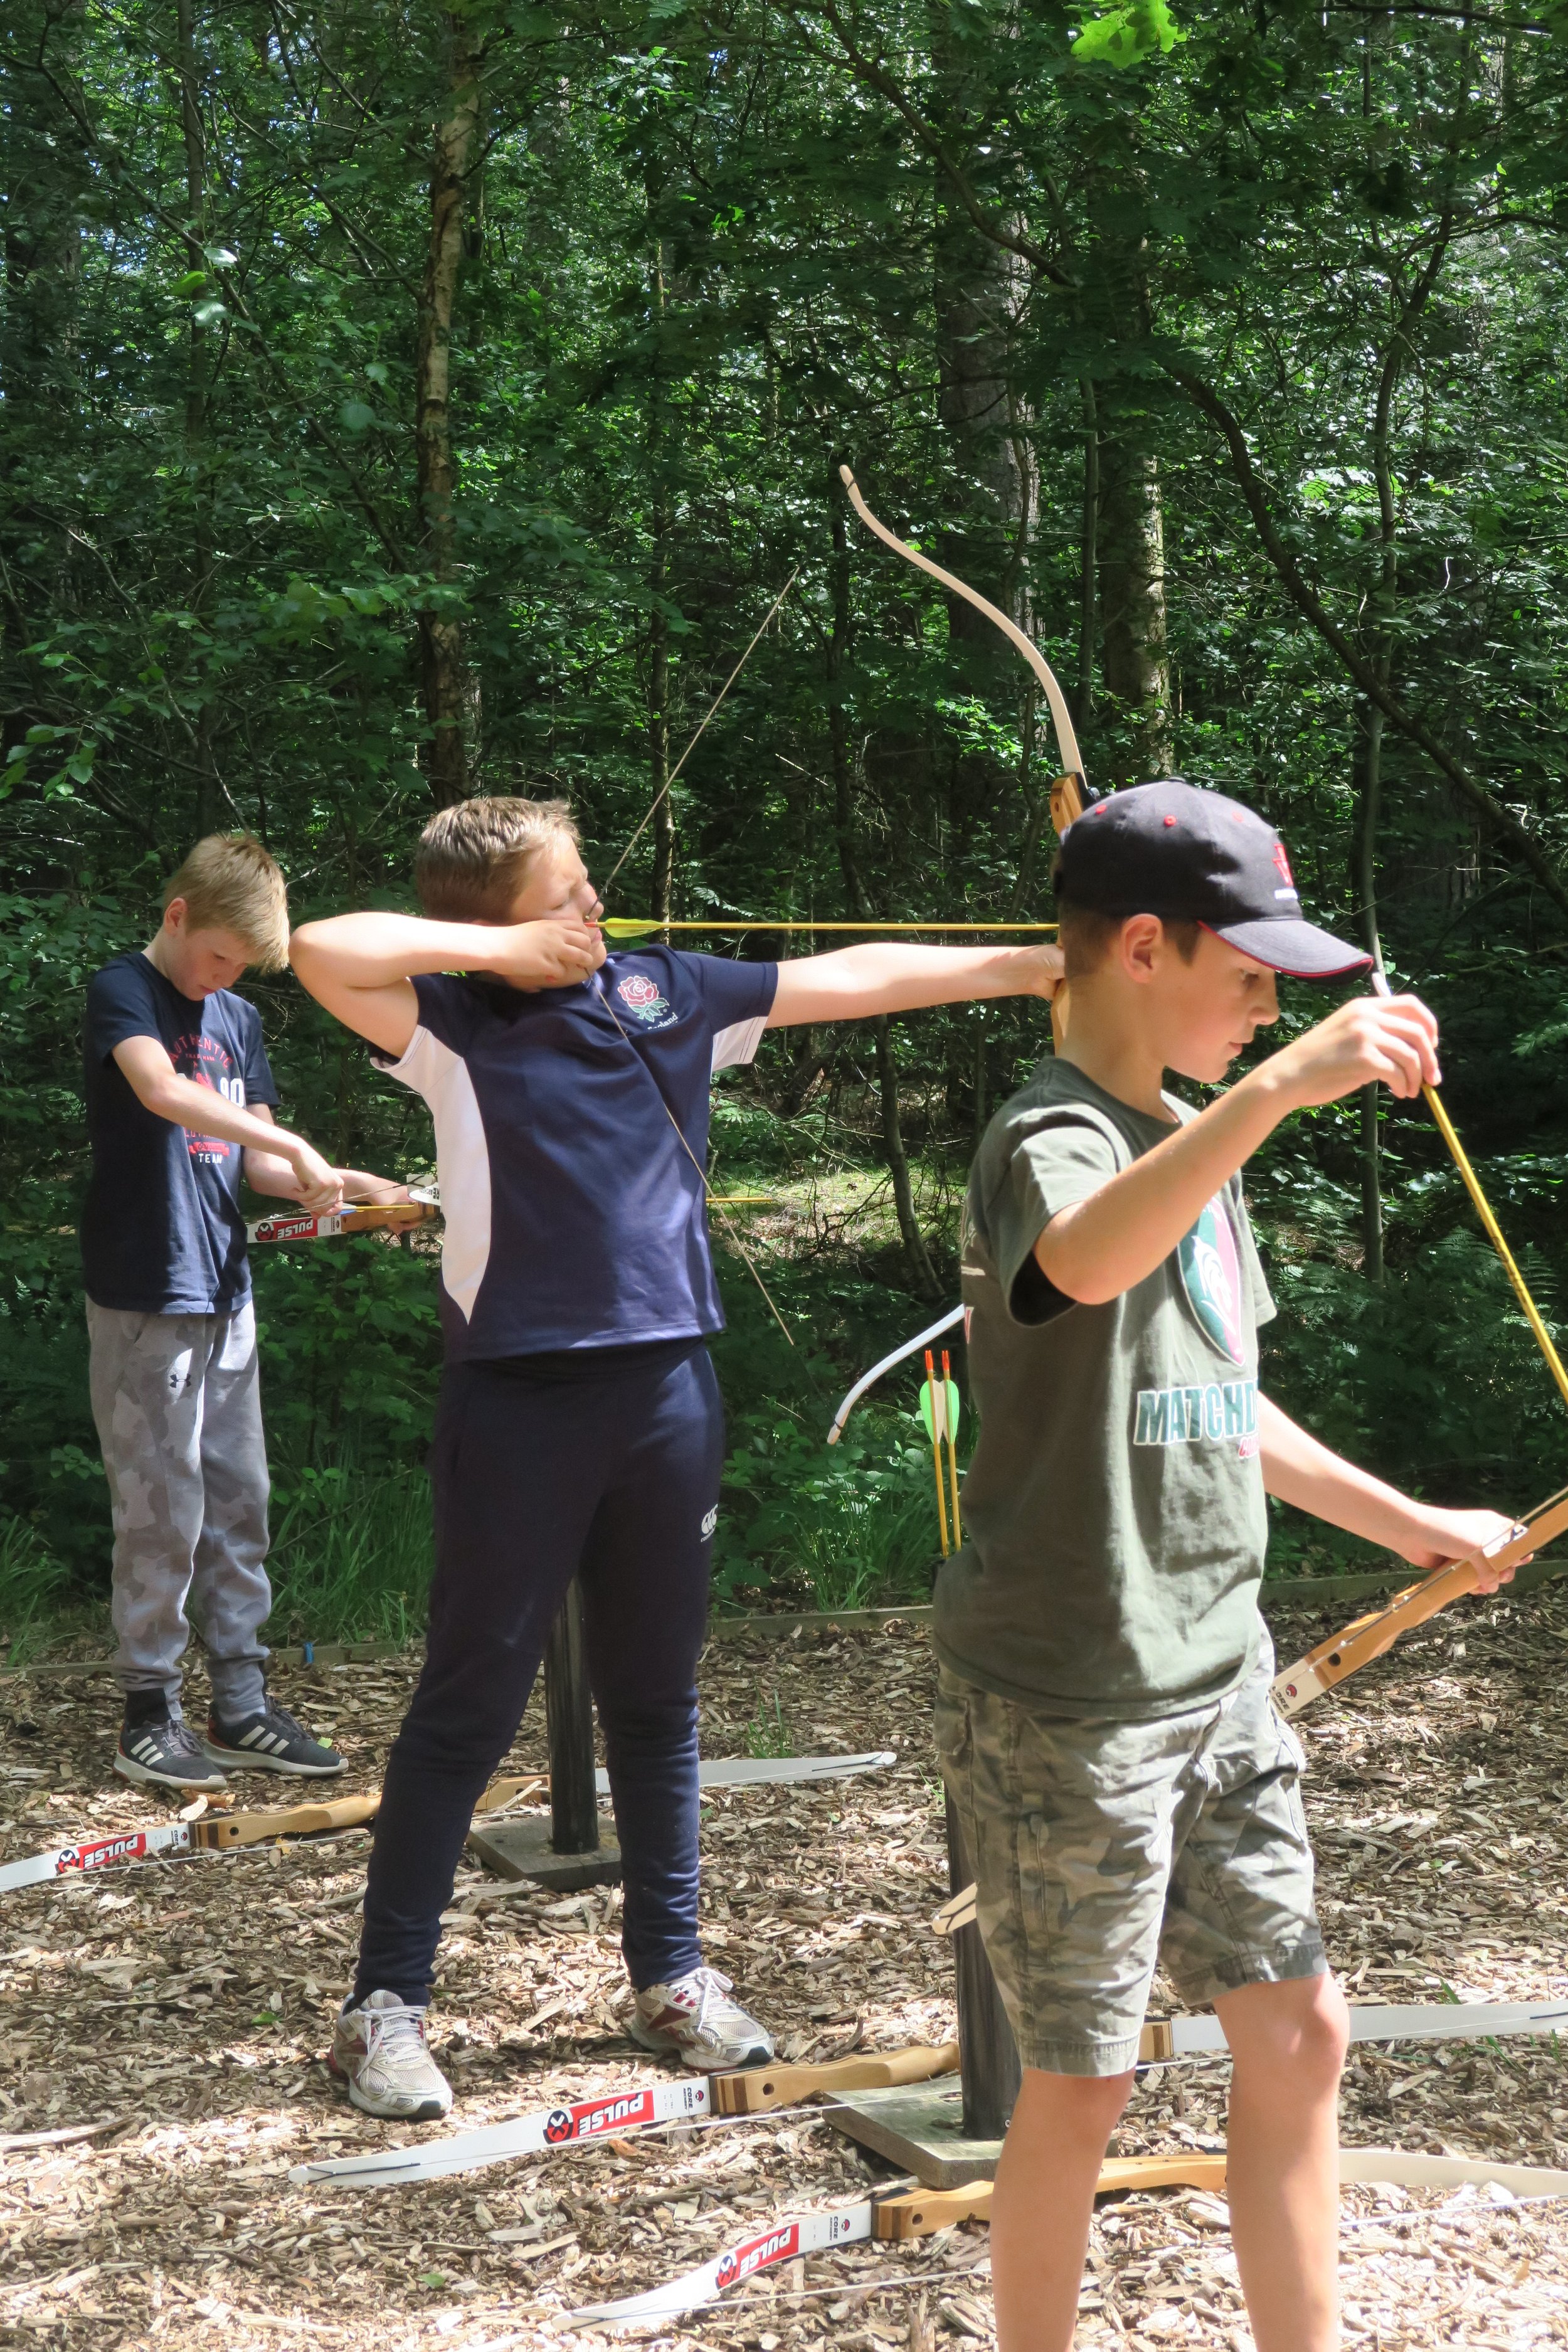 group of children on an archery range firing